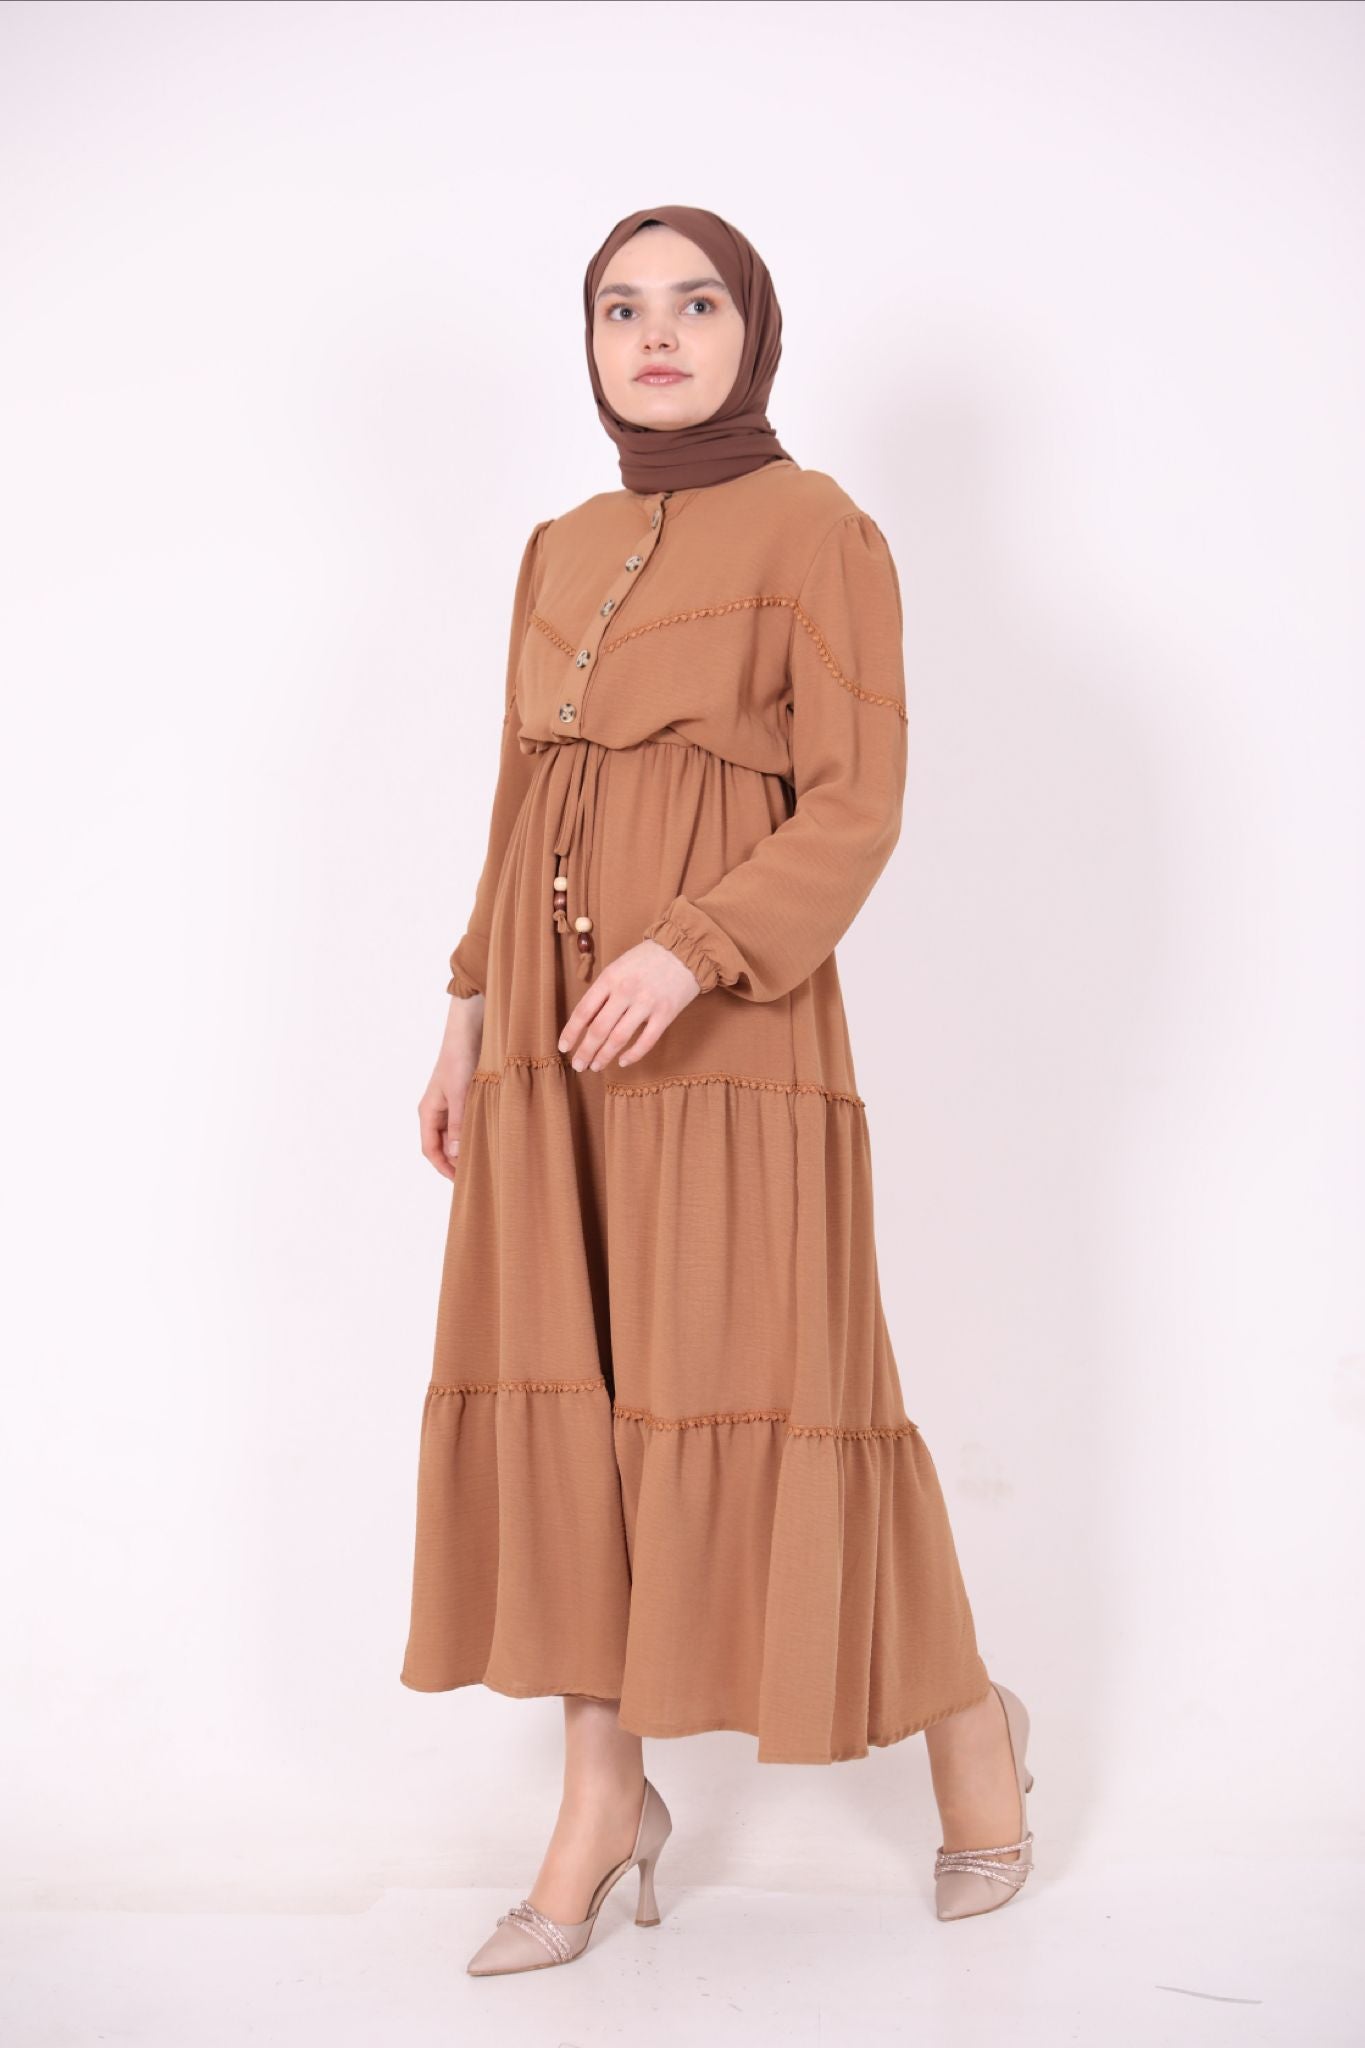 Belted Laced Dress Camel